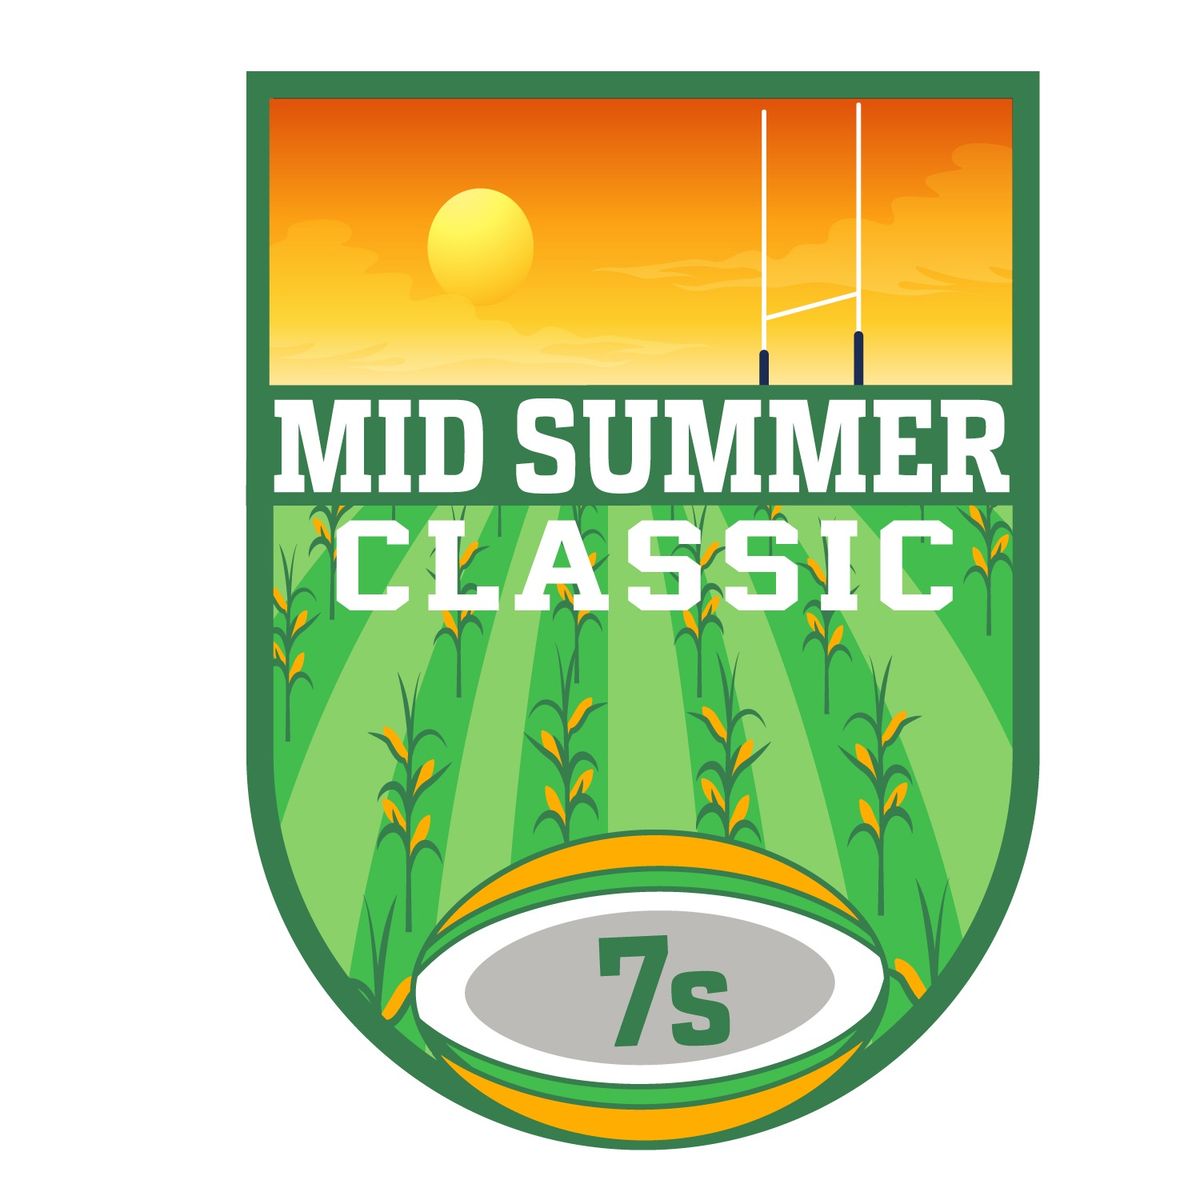 Mid Summer Classic 7s